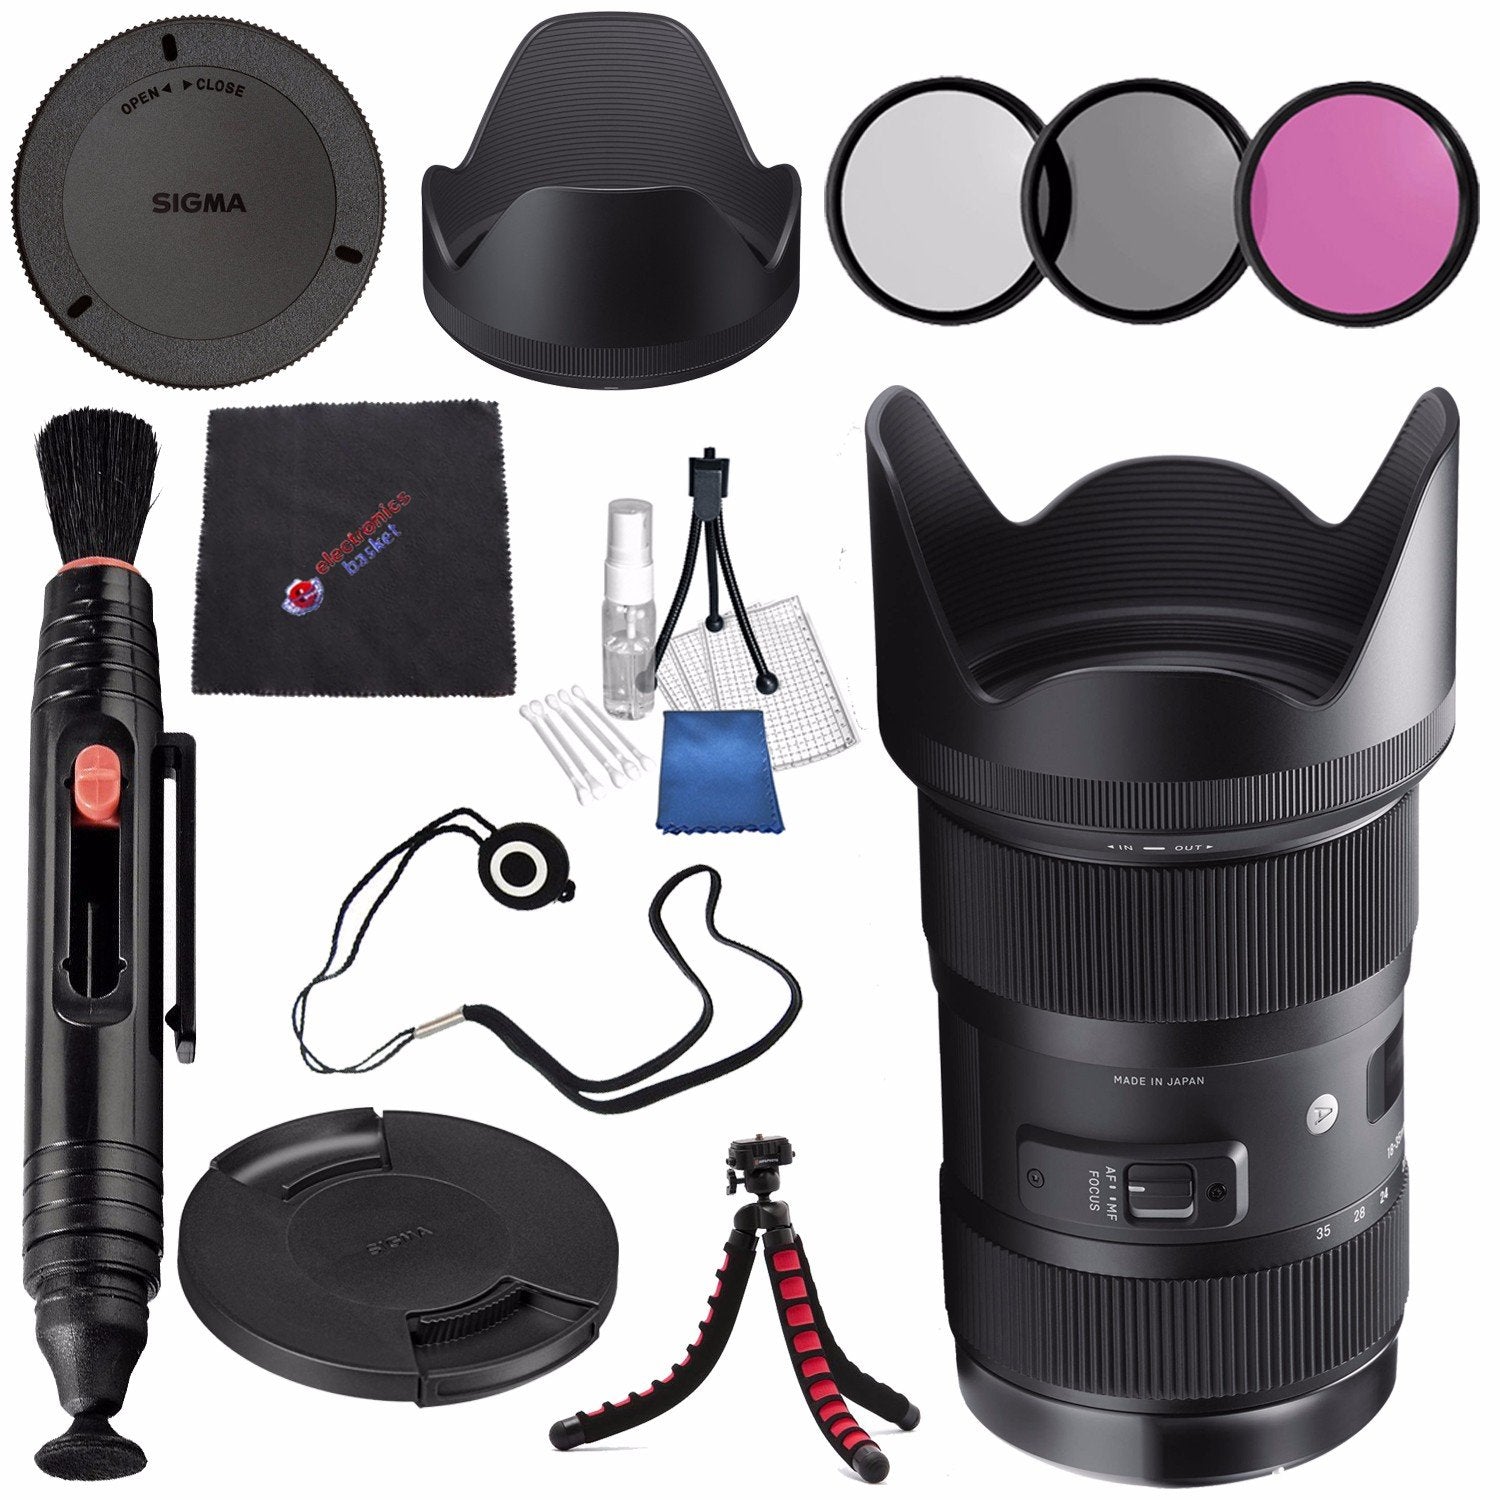 Sigma 18-35mm f/1.8 DC HSM Art Lens for Nikon F #210306 + 72mm 3 Piece Filter Kit + Lens Pen Cleaner + Microfiber Cleaning Cloth + Tripod Bundle